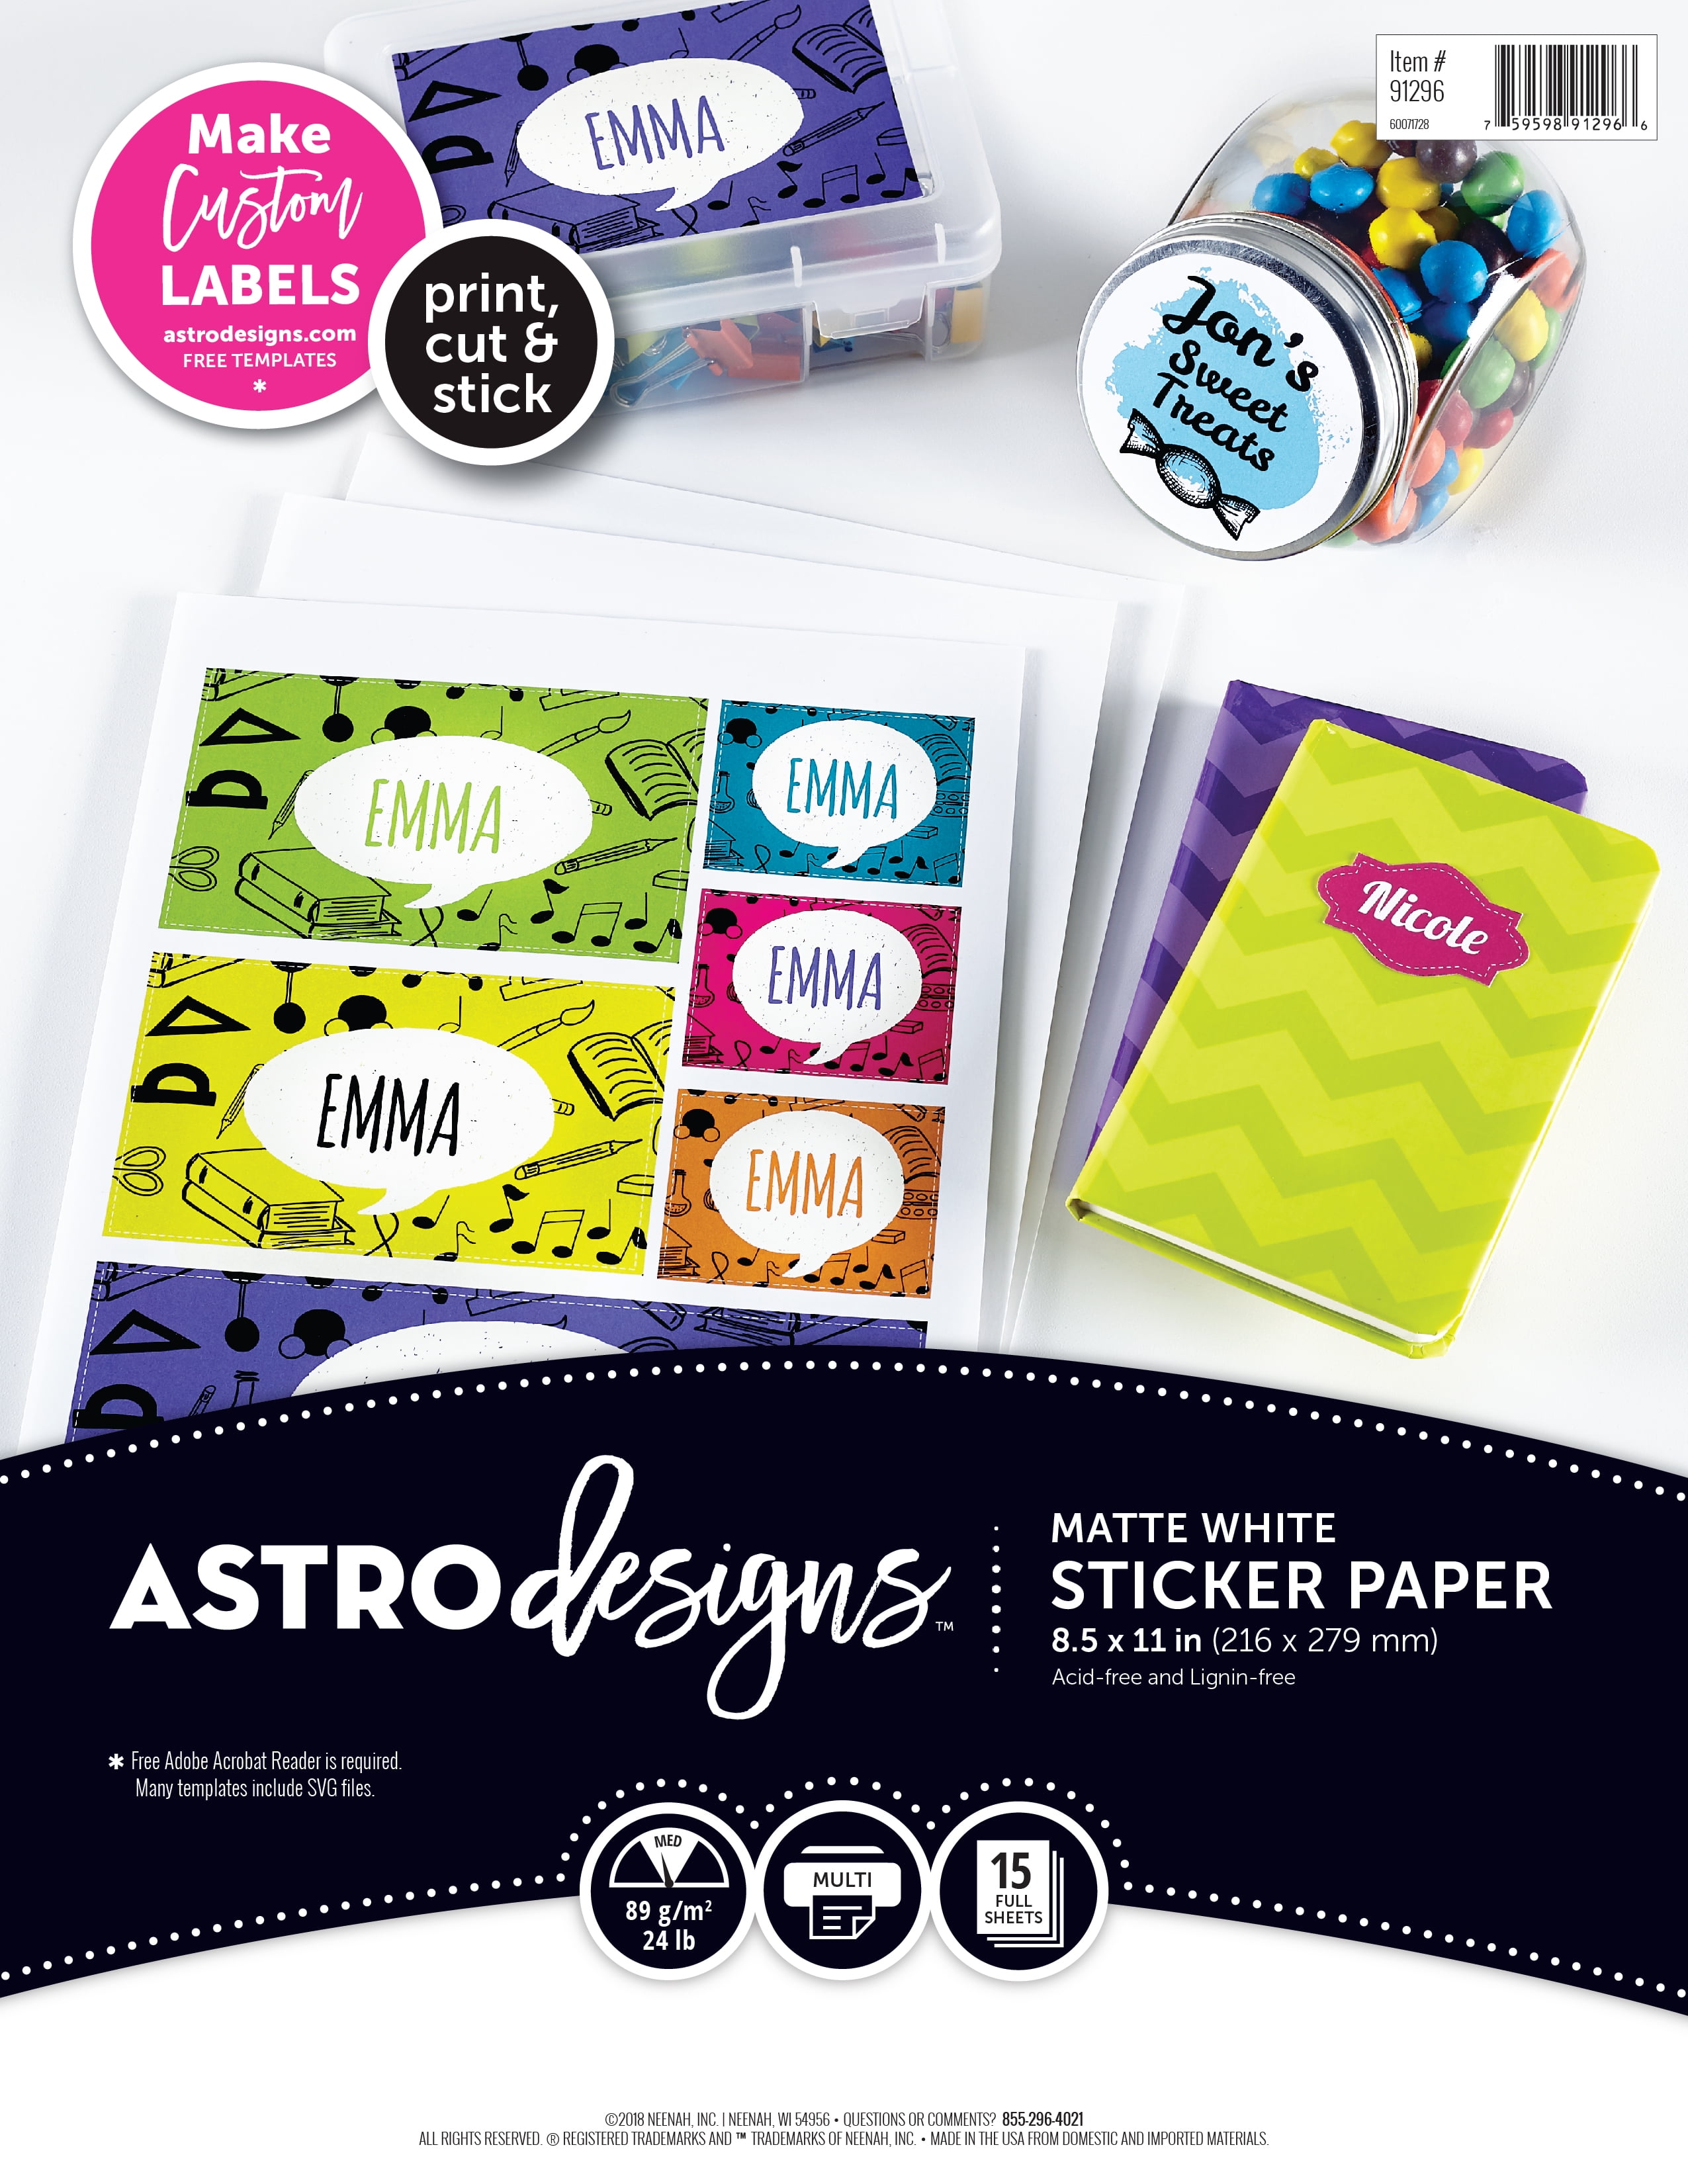 Astrodesigns Sticker Paper, 8.5 x 11, 24 lb., Matte Finish, White, 15  Sheets 